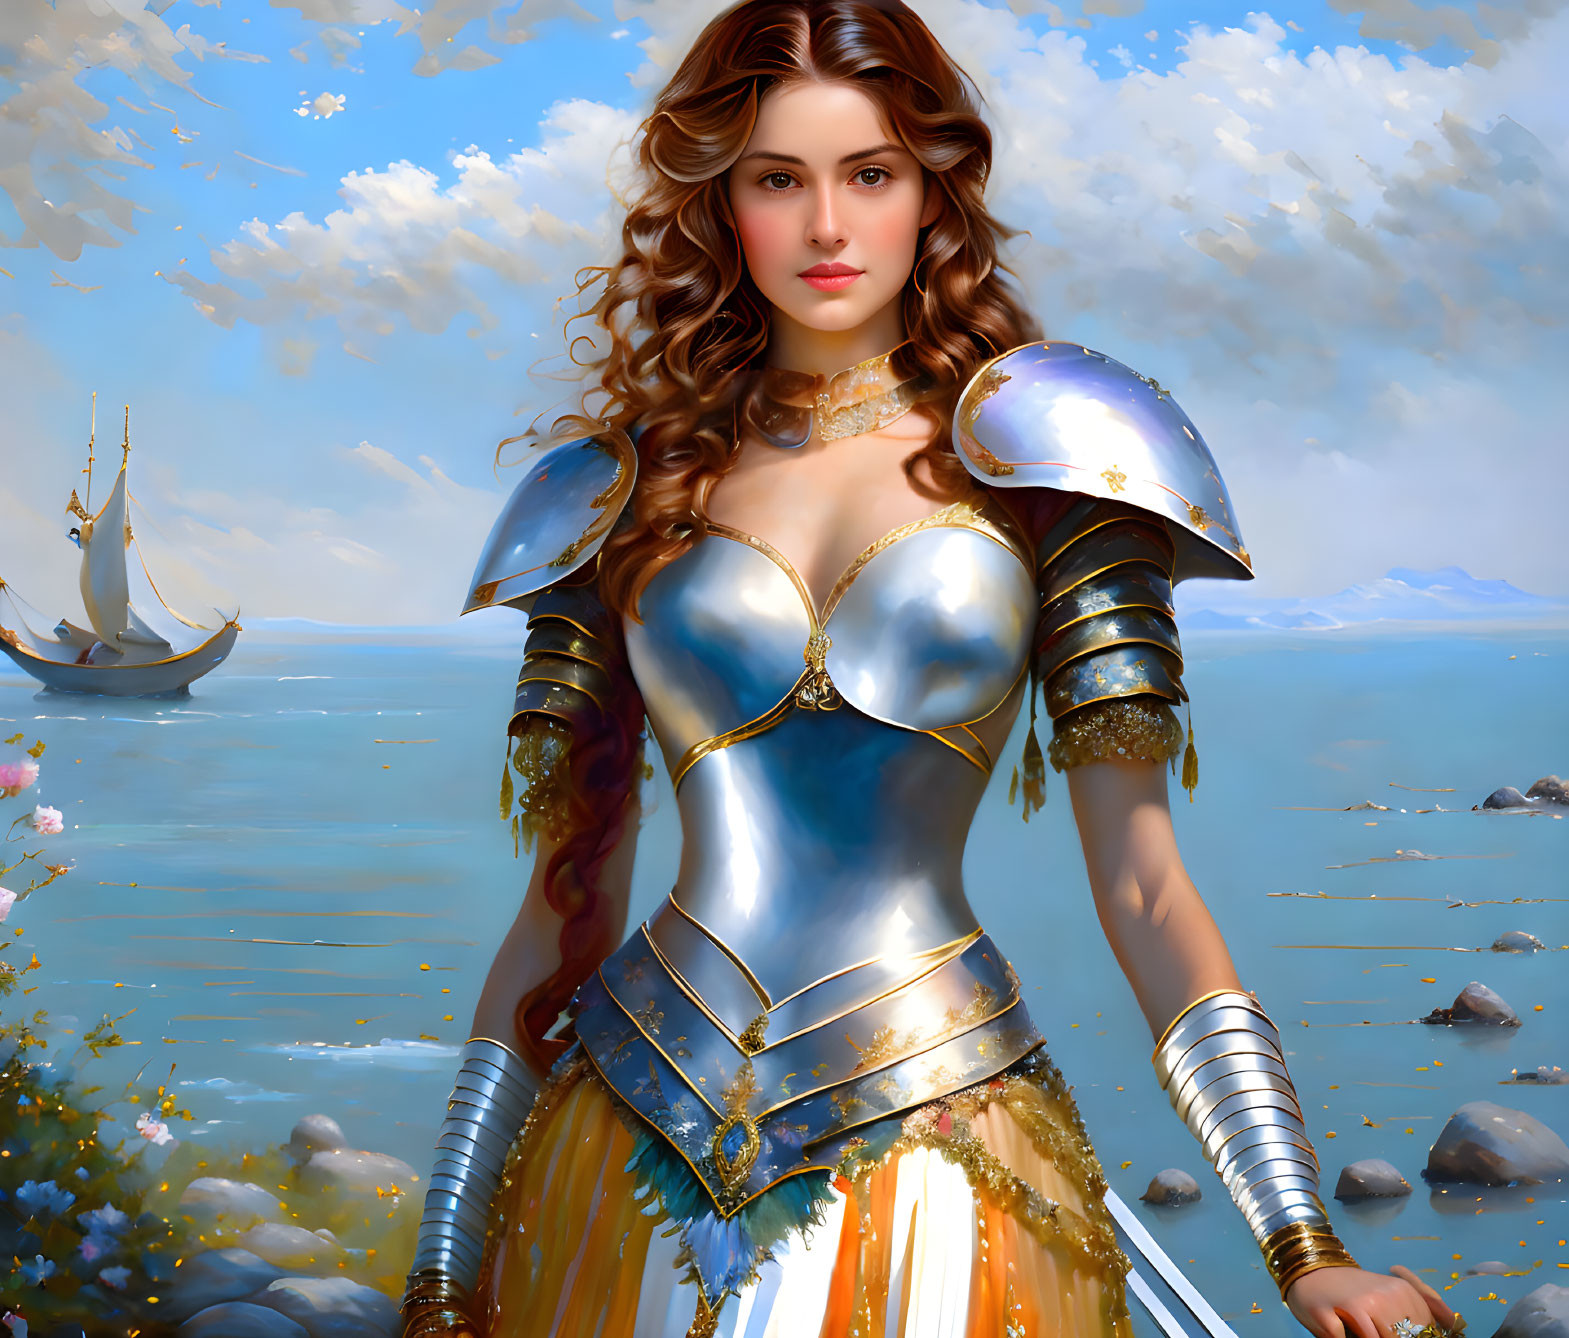 Fantasy armor woman digital art with coastal backdrop and sailing ship